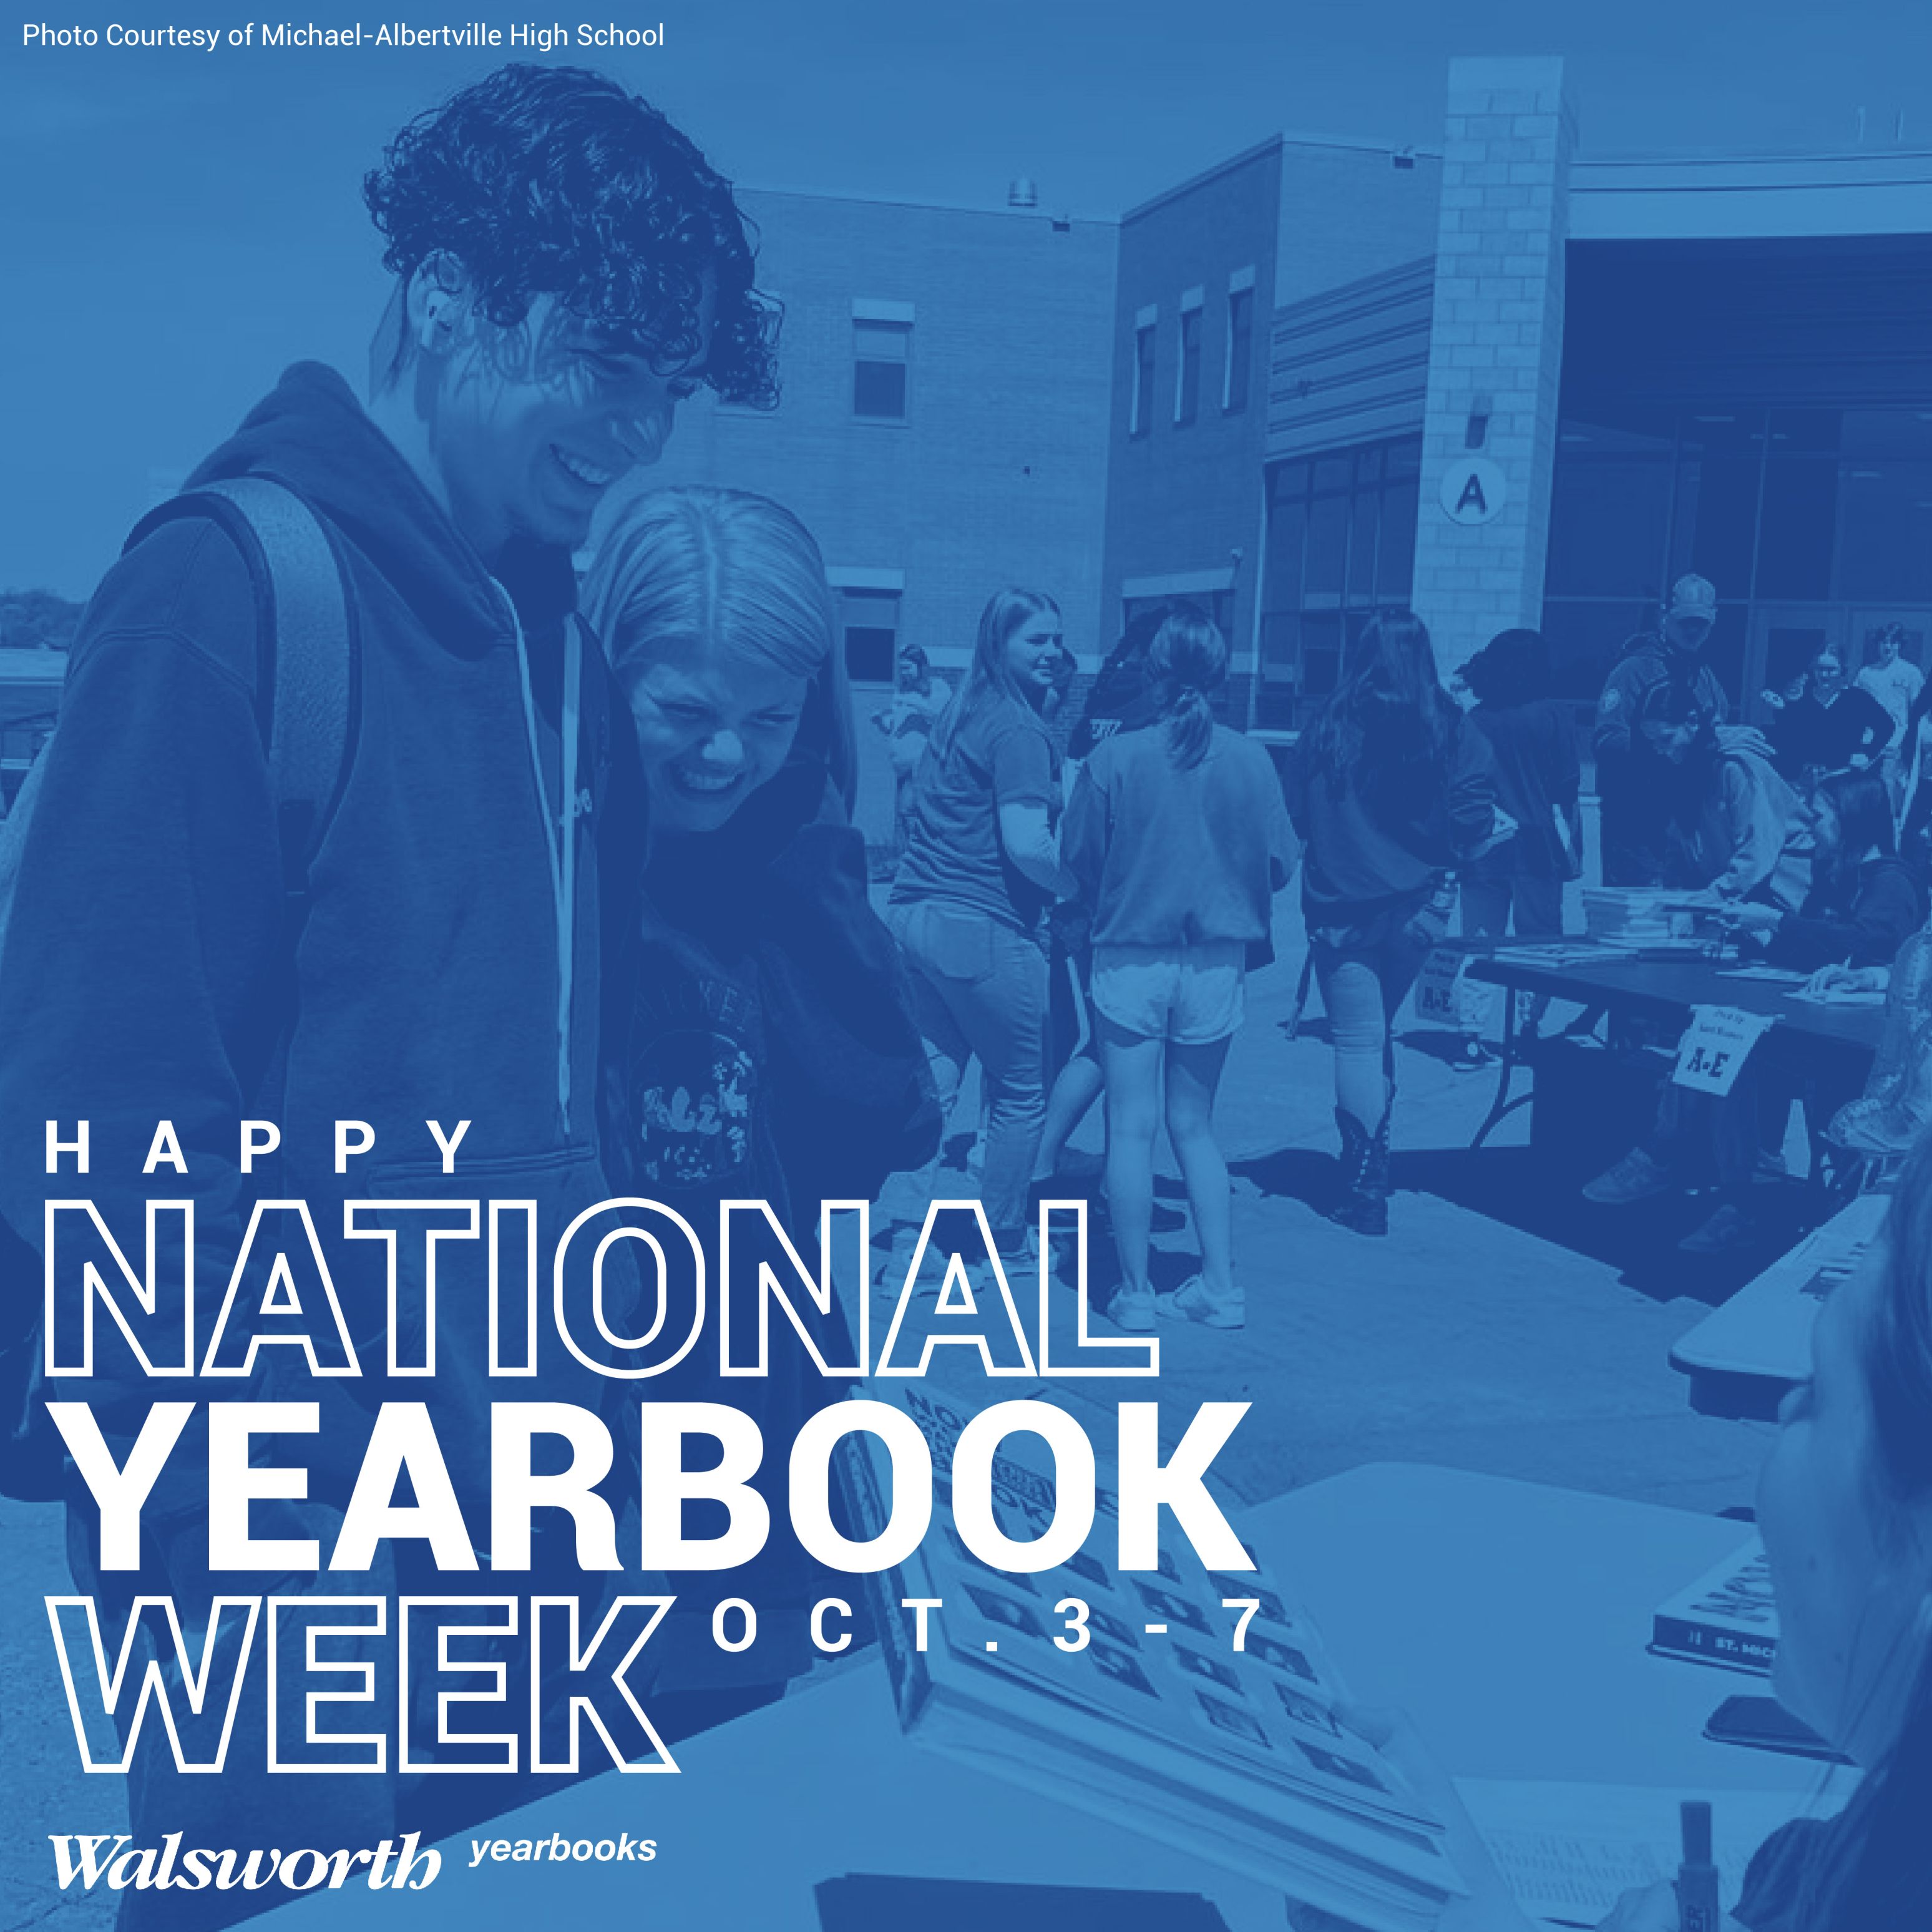 Happy National Yearbook Week: Oct 3-7